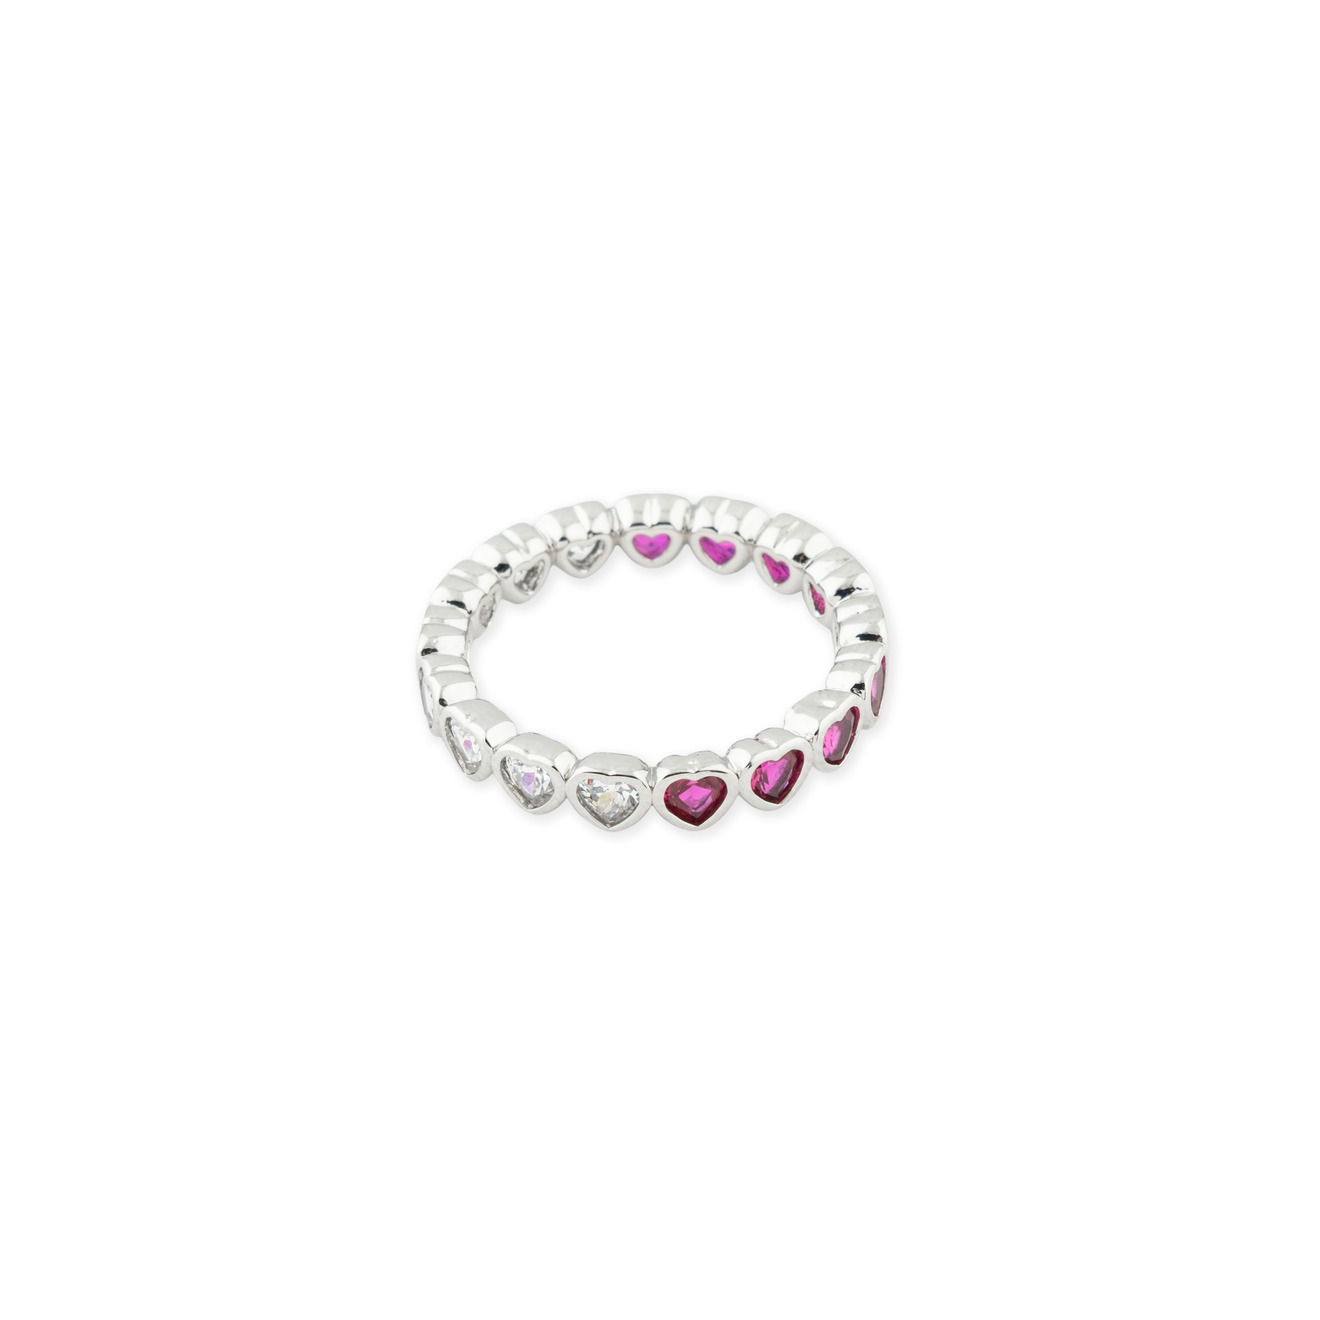 Herald Percy Серебристое кольцо из сердец с белыми и розовыми кристаллами herald percy серебристое кольцо из сердец с белыми и зелеными кристаллами